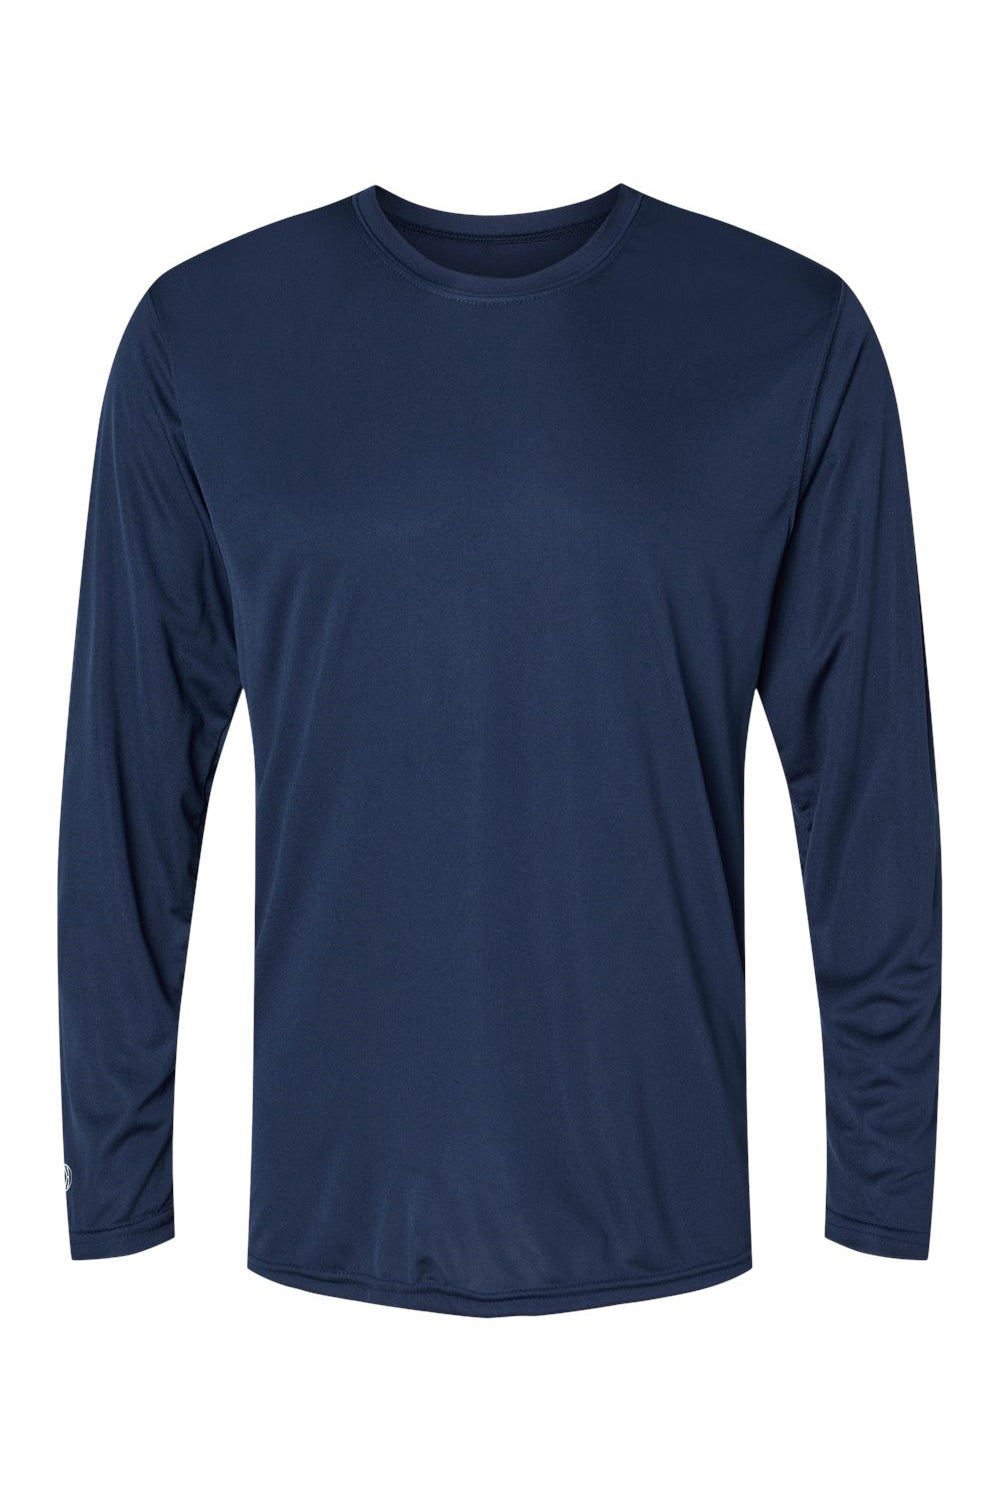 Holloway 222822 Mens Momentum Long Sleeve Crewneck T-Shirt Navy Blue Flat Front